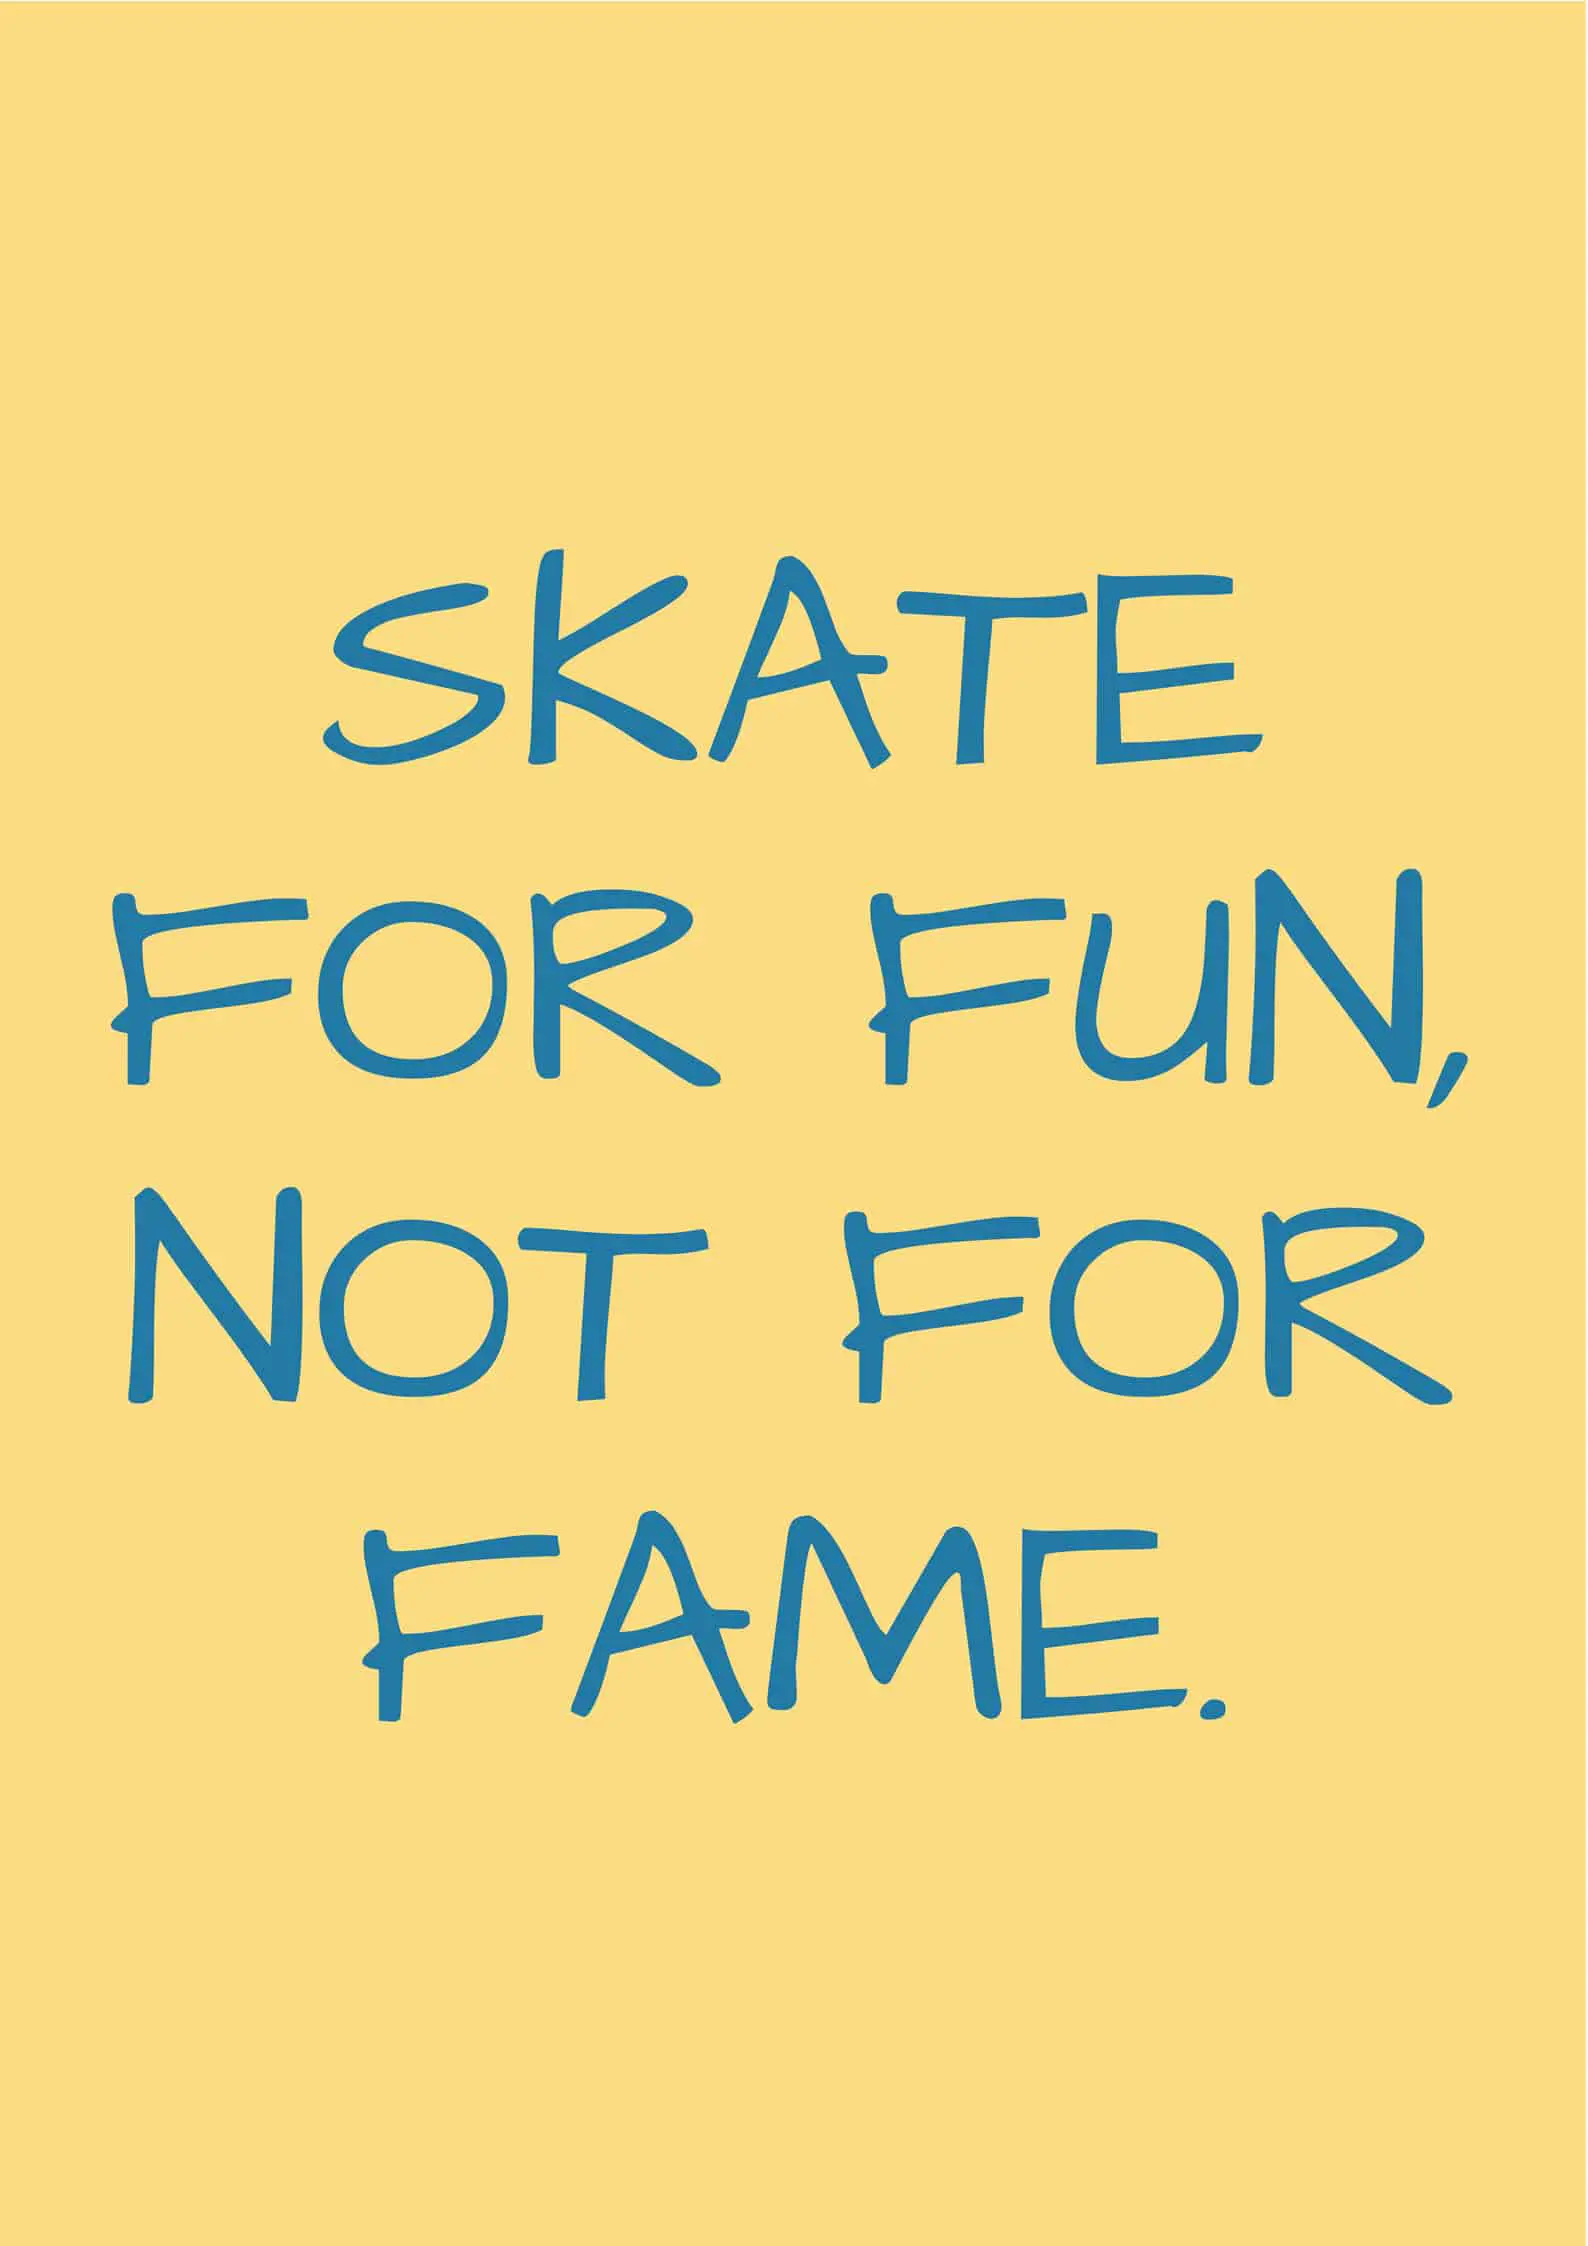 Skate for fun, not for fame.